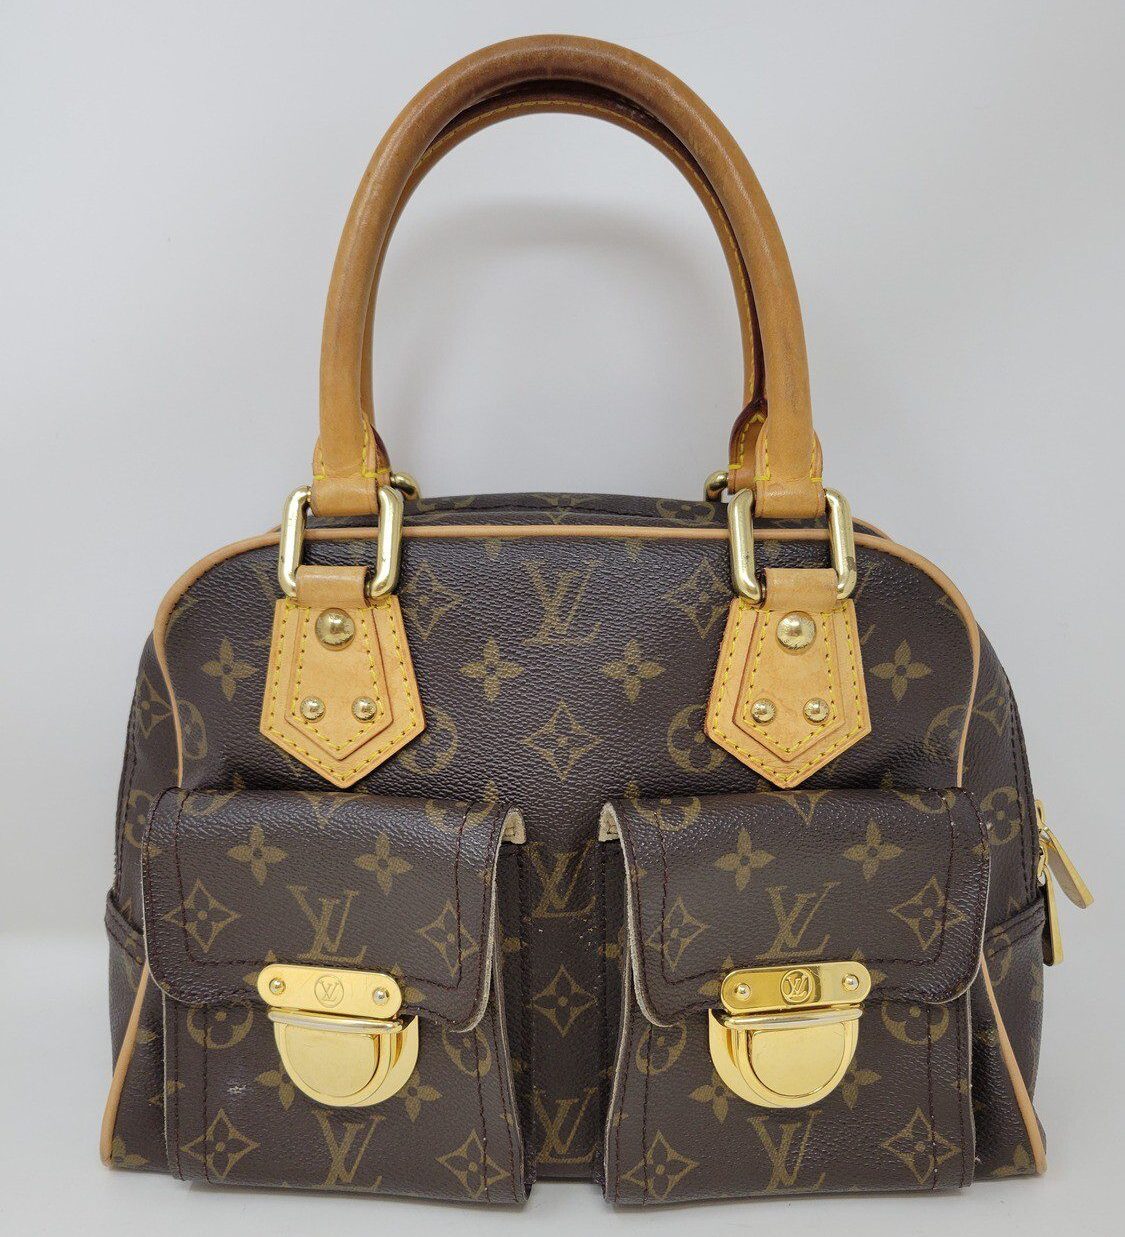 Sell Louis Vuitton Handbags - Get Cash Online Today